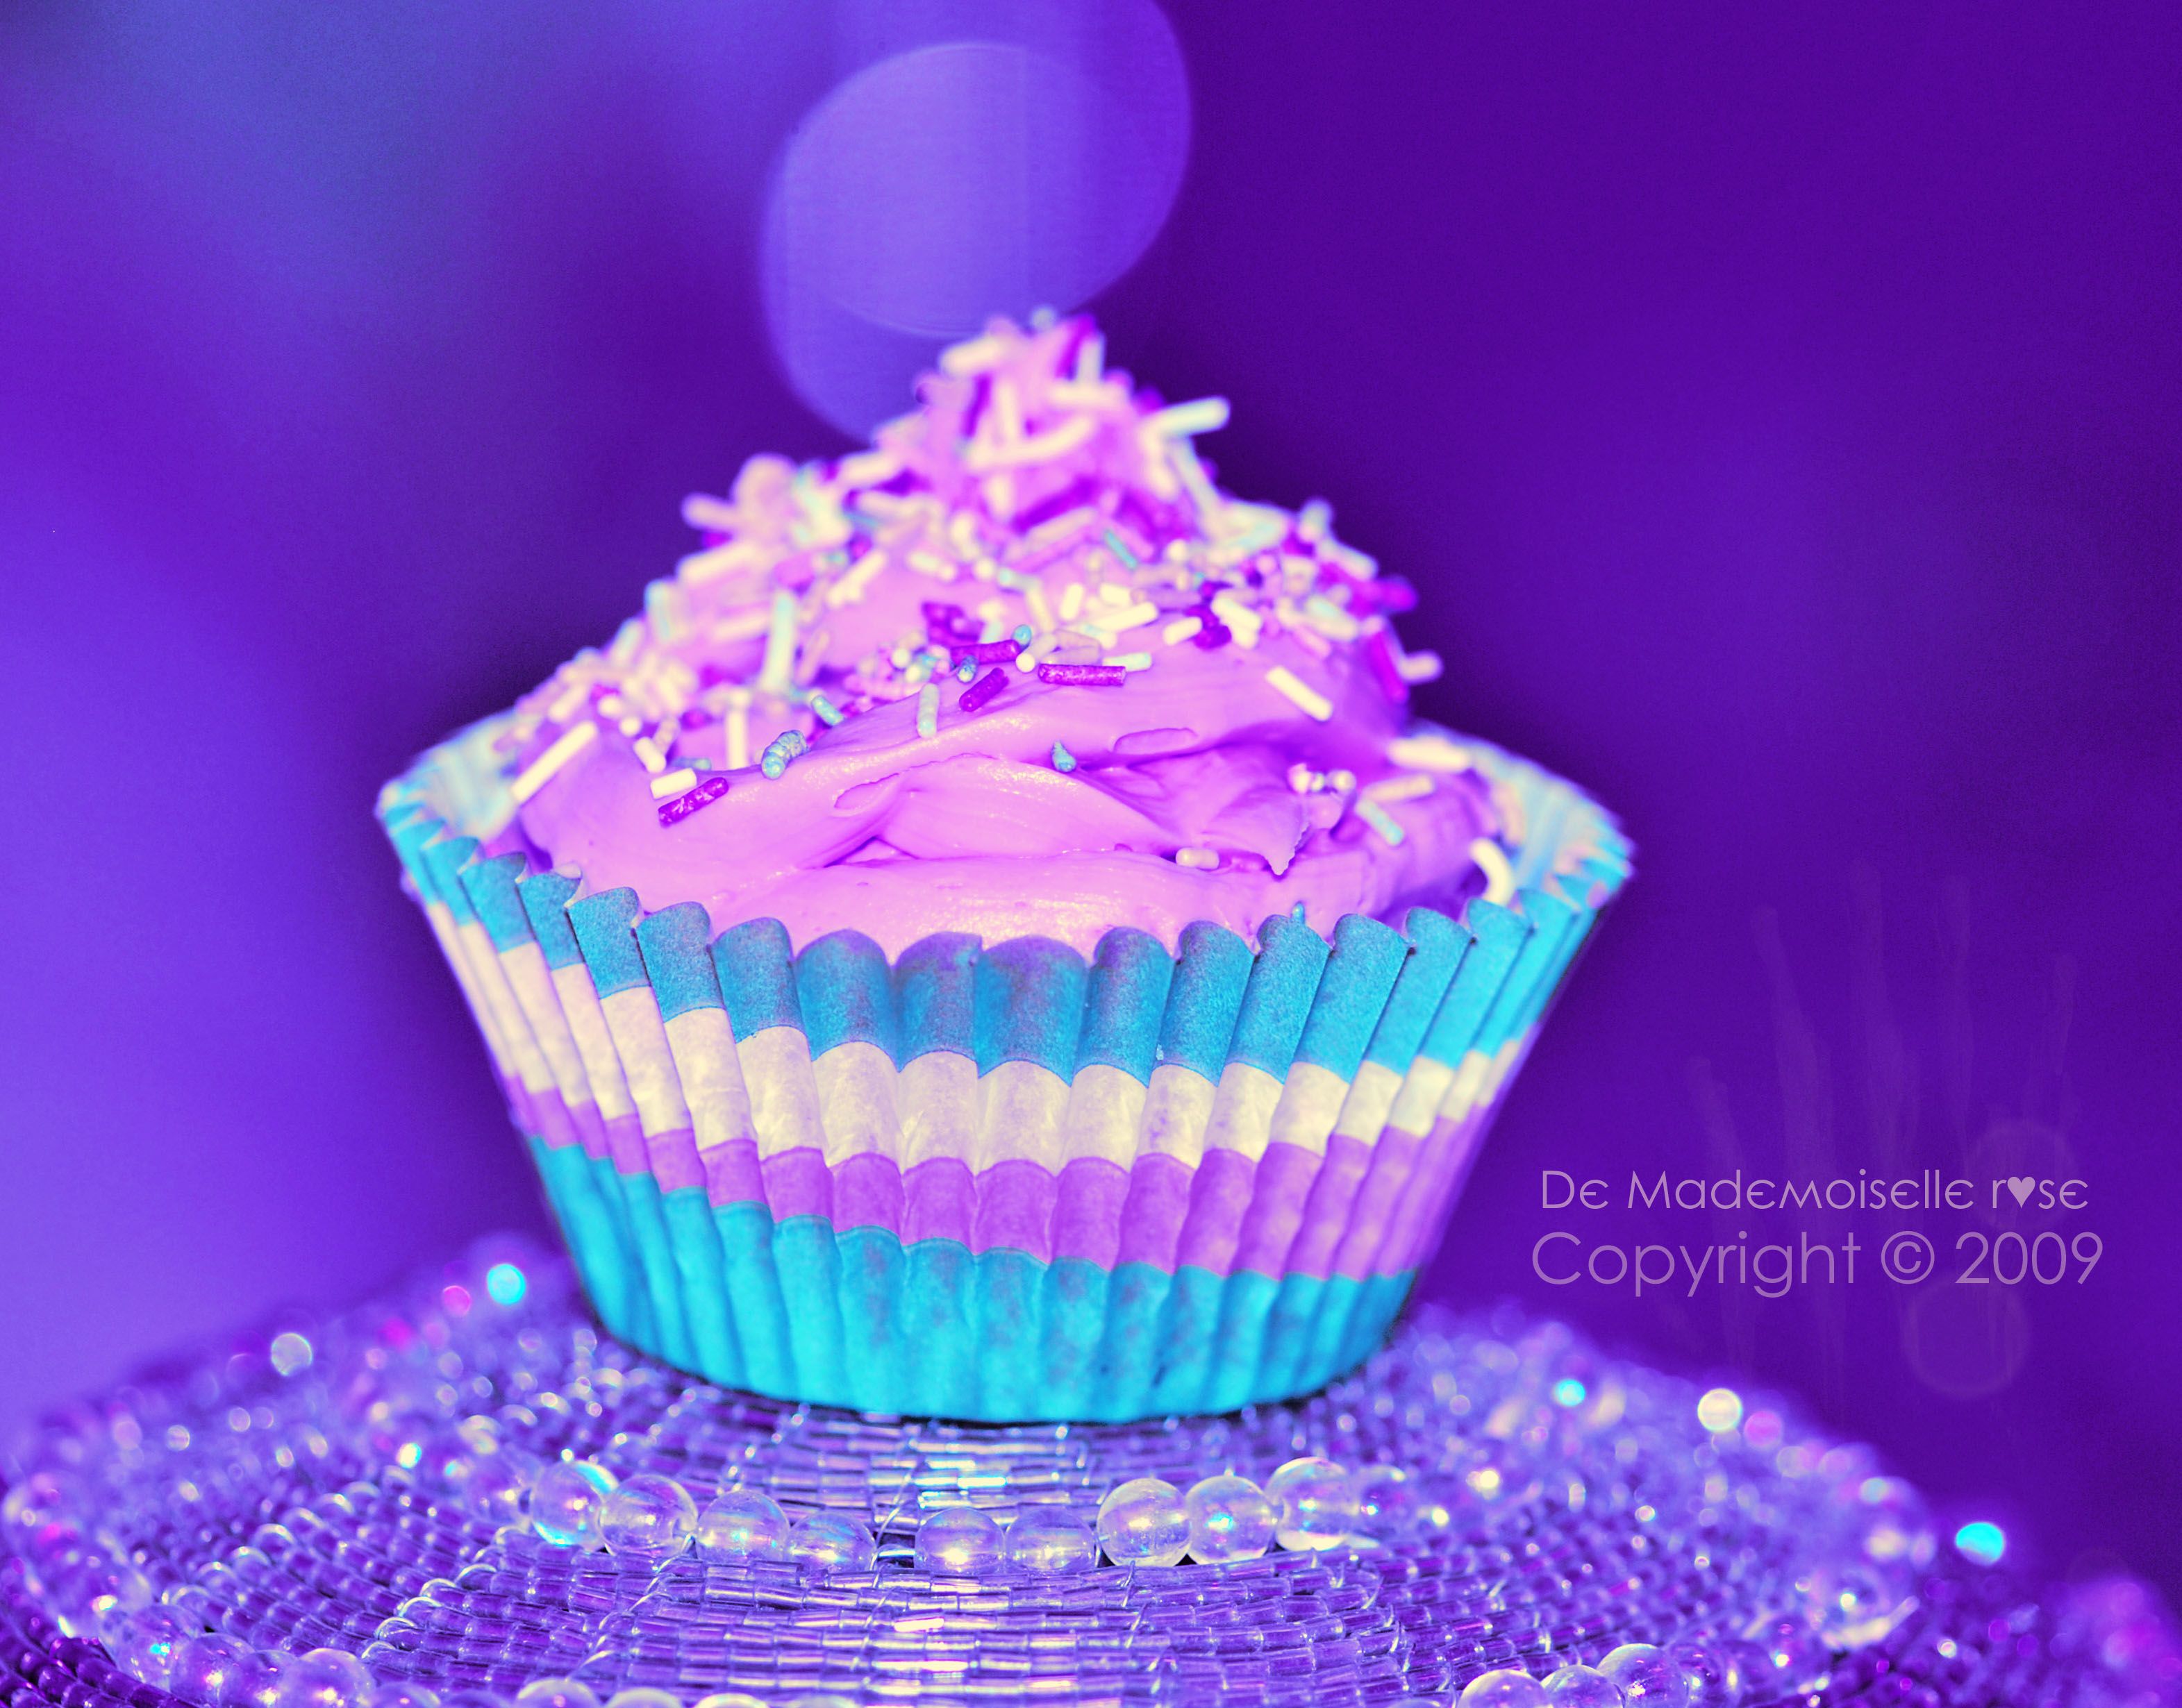 Wallpaper, purple, violet, blue, baby, pink, sprinkles, dessert, magenta, light, handmade, sweetness, flavor, cupcake, buttercream, cake decorating, royal icing, baking cup 3142x2460